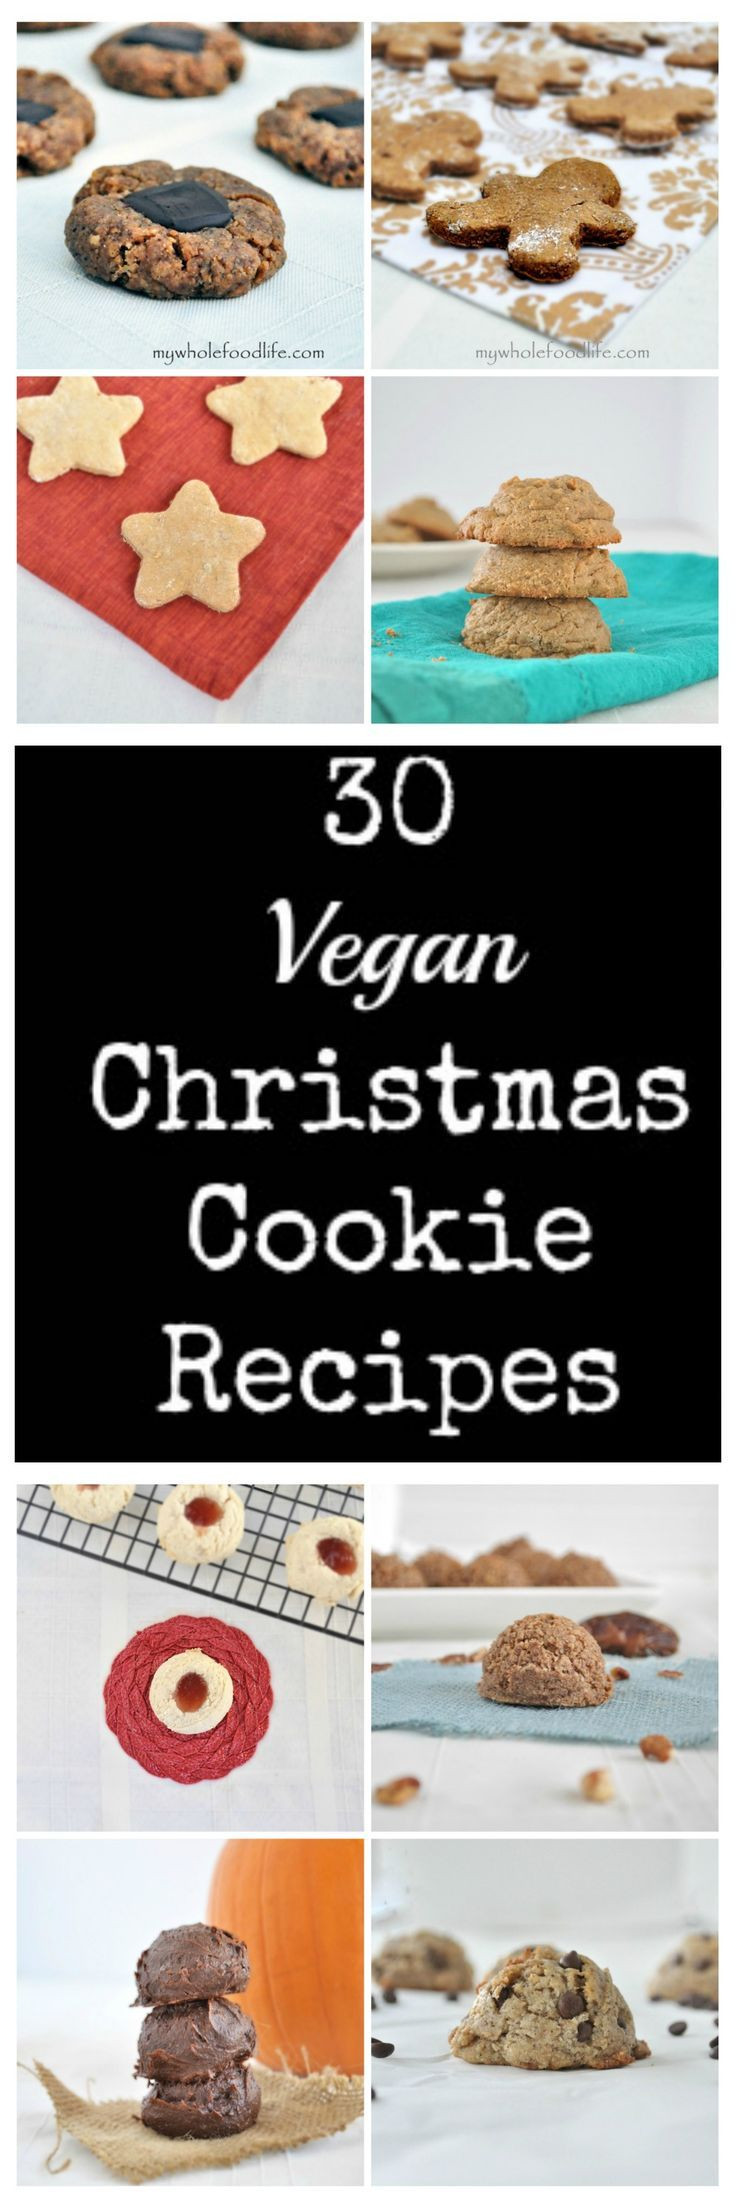 Vegan Christmas Cookie Recipes
 17 Best ideas about Vegan Christmas Cookies on Pinterest